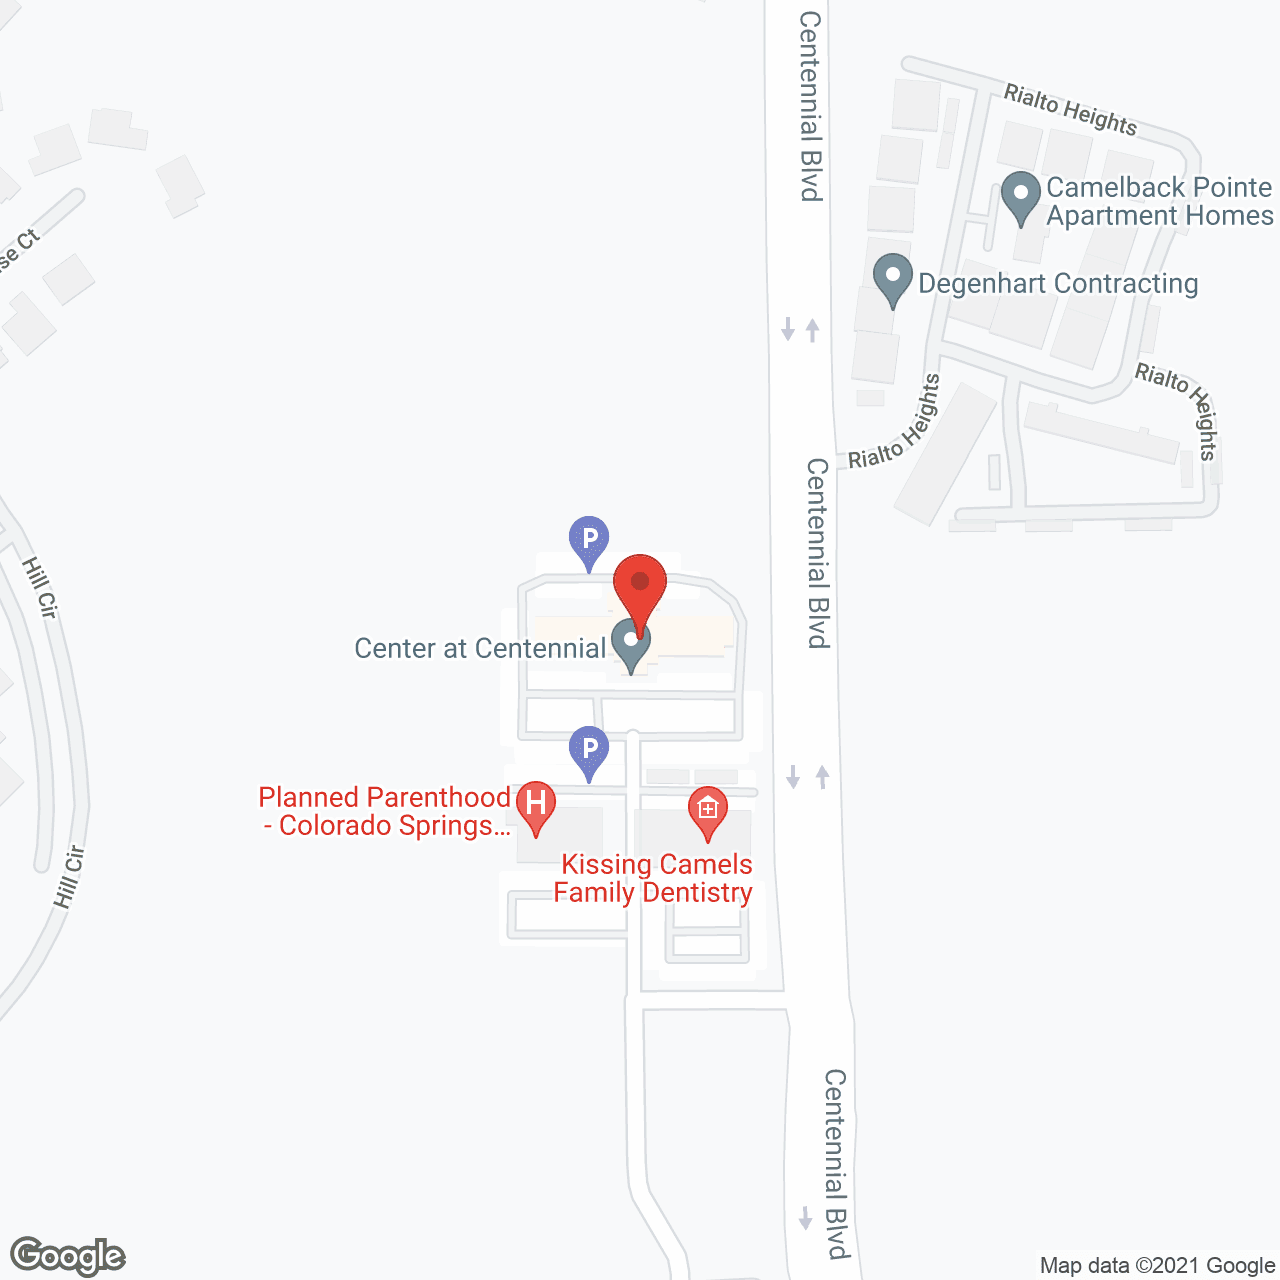 The Center at Centennial in google map